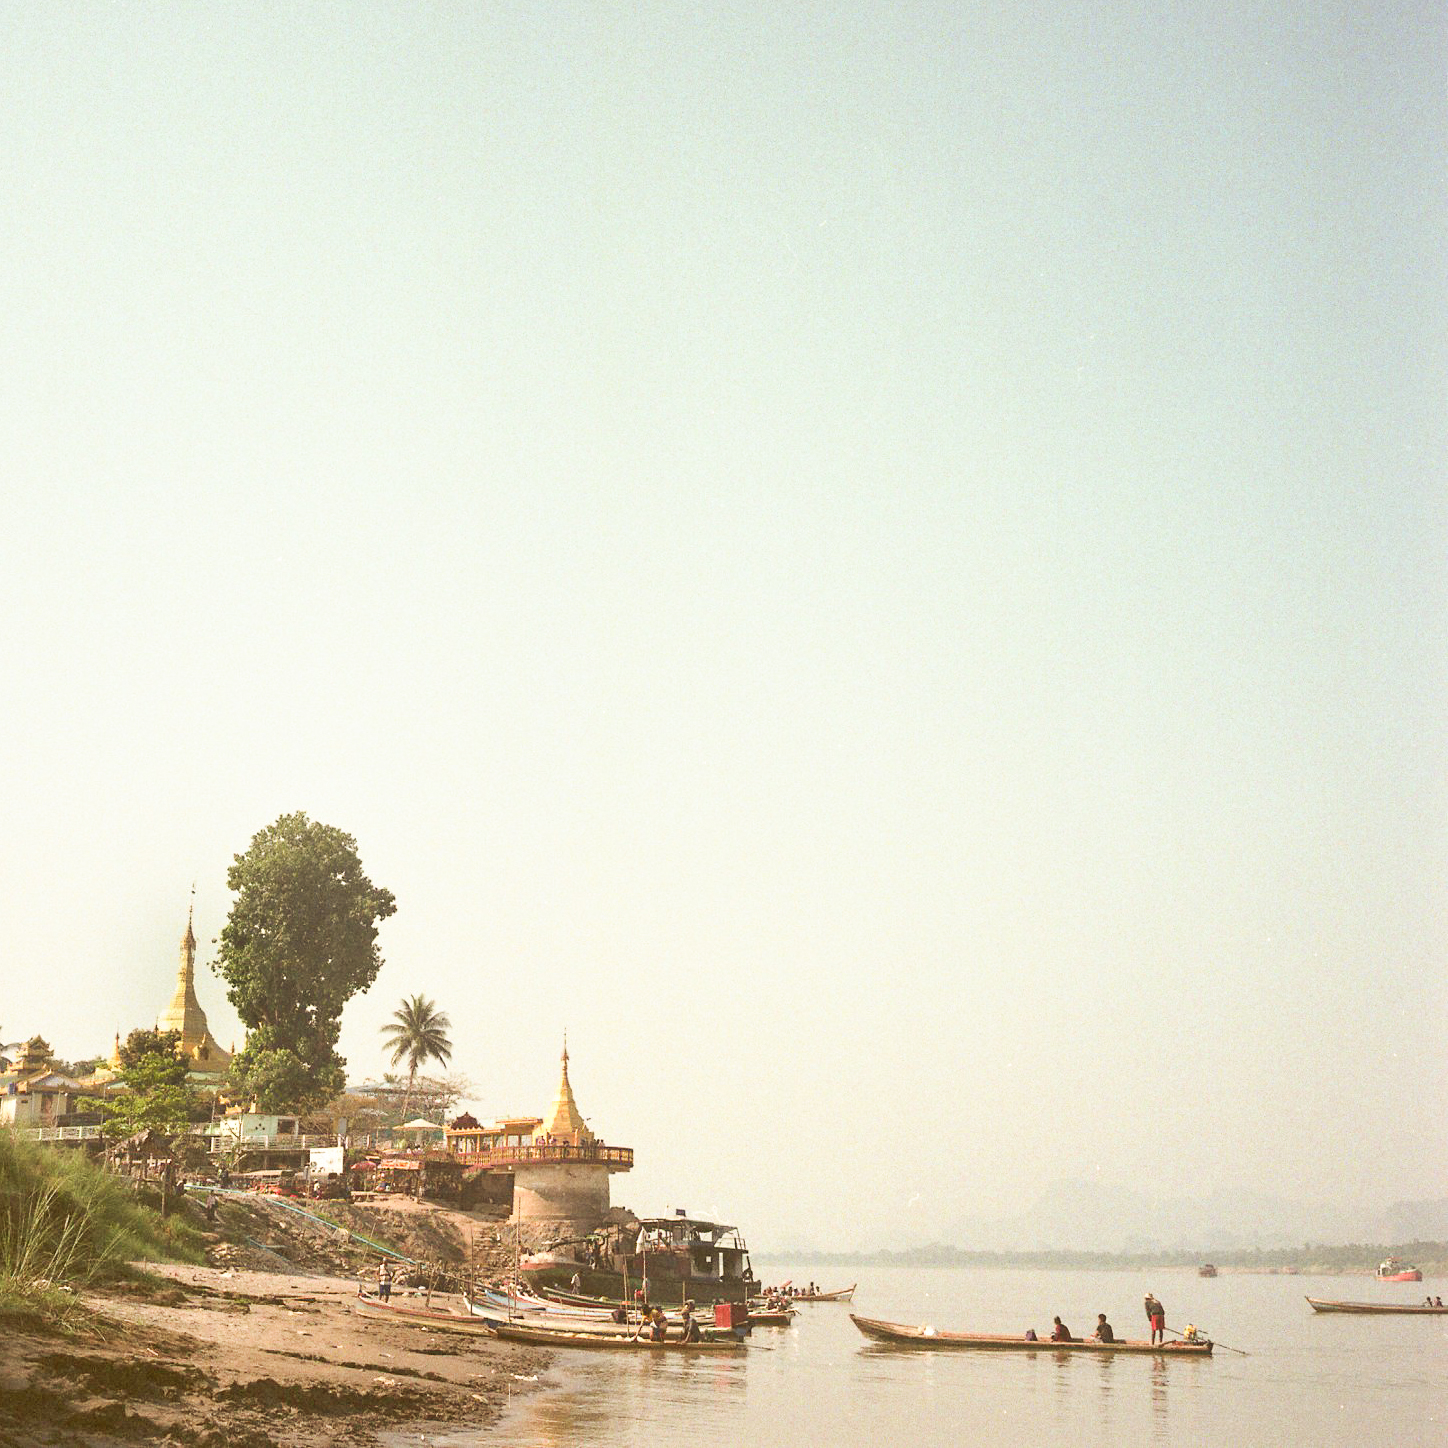 Myanmar-Irrawaddy_8